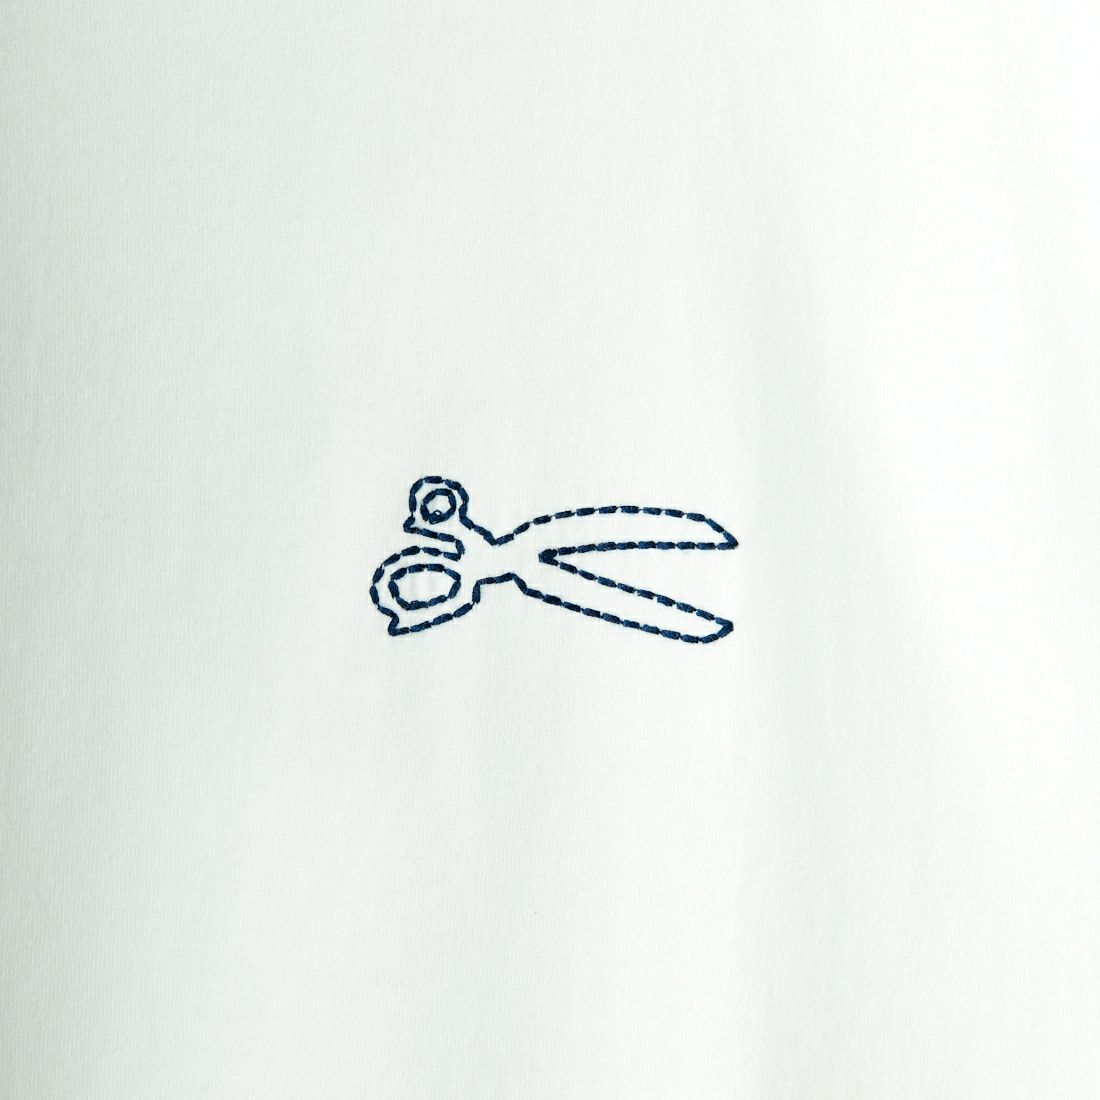 DENHAM [デンハム] チェーンTシャツ [CHAIN-TEE] WHITE